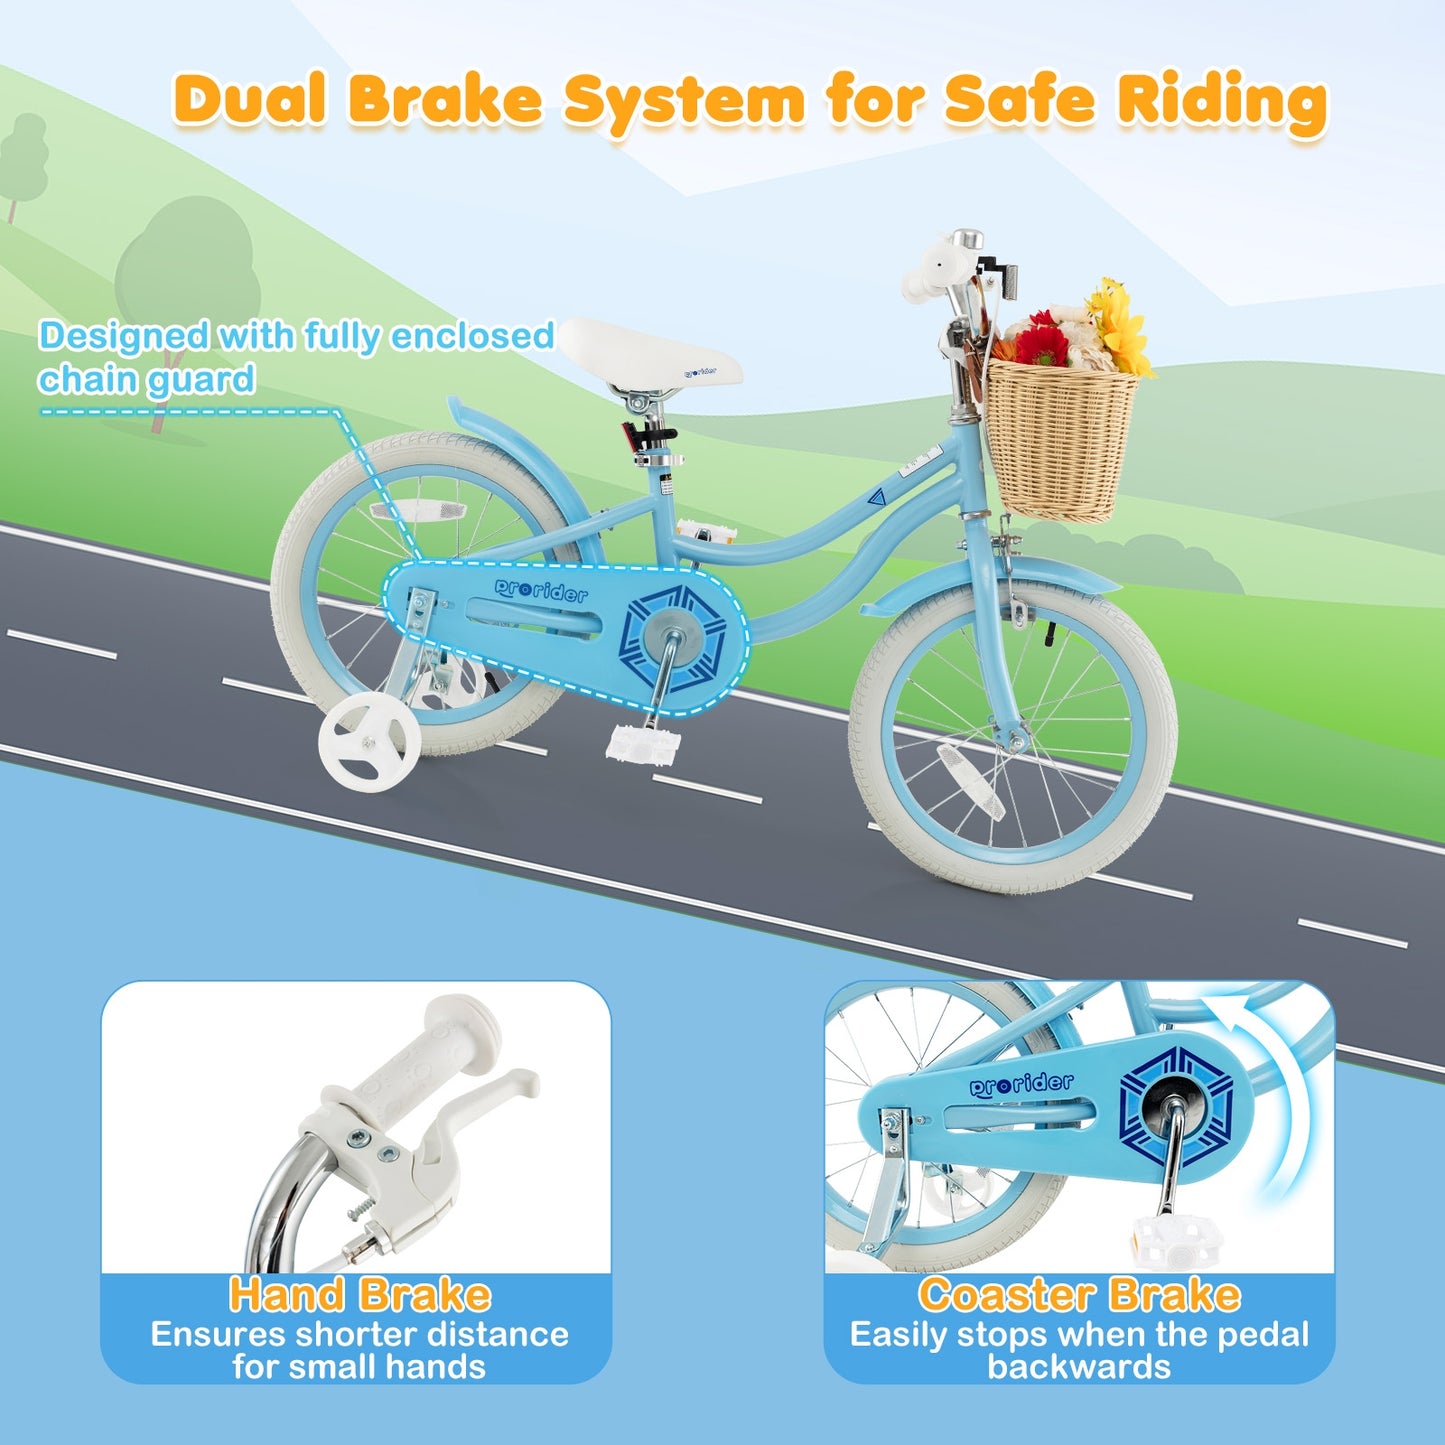 16-Inch Kids Bike with Training Wheels and Adjustable Handlebar Seat-Blue